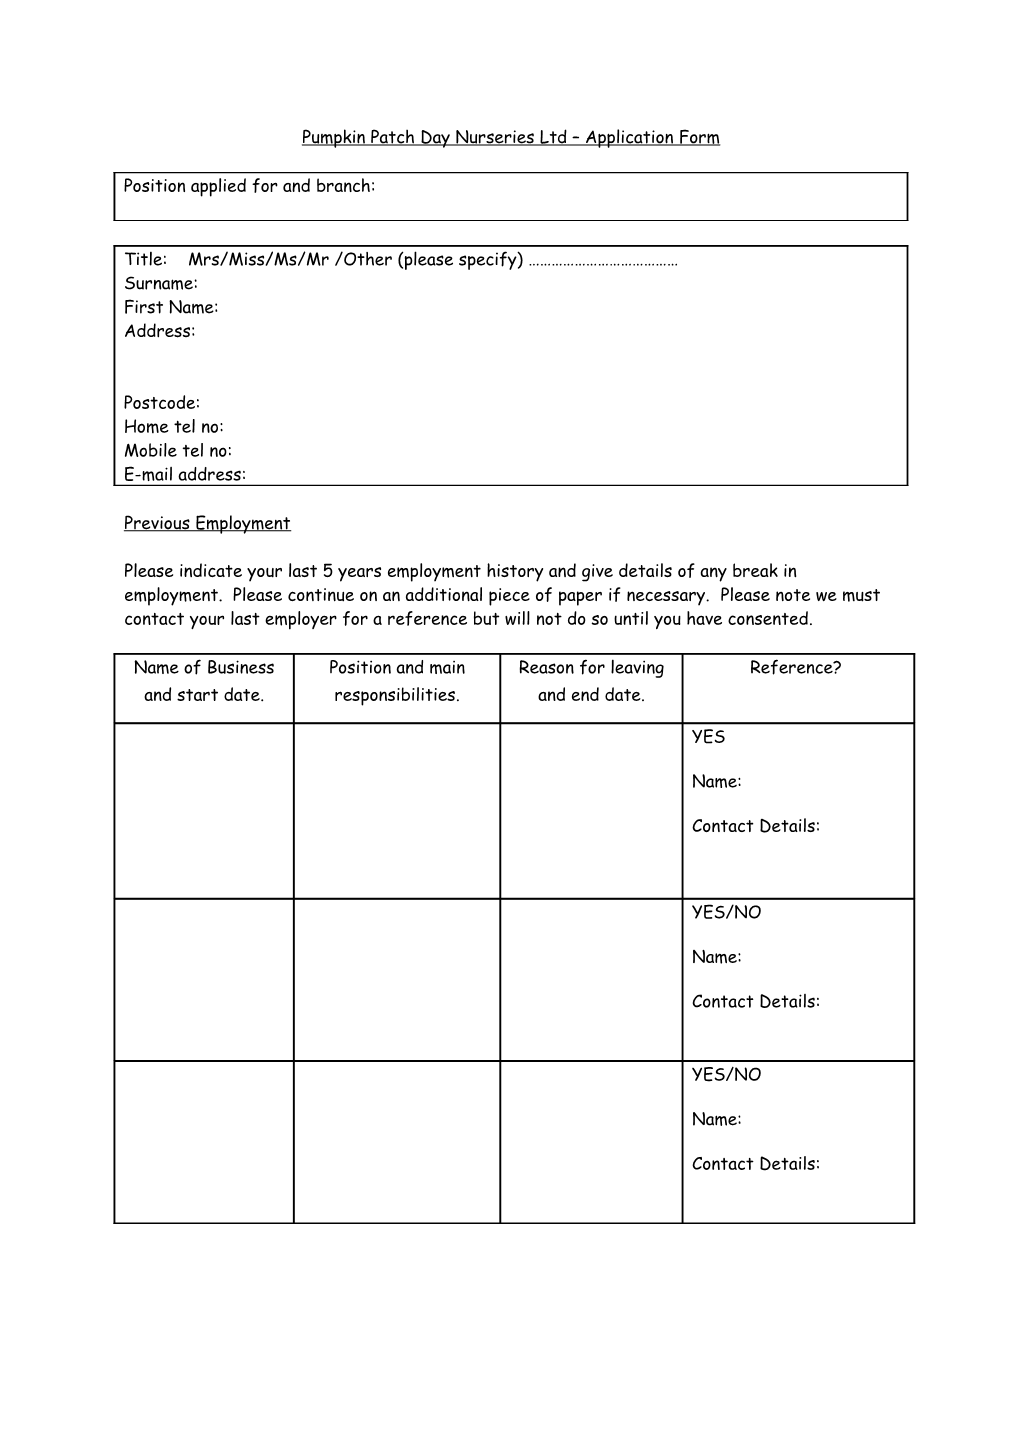 Pumpkin Patch Day Nurseries Ltd Application Form